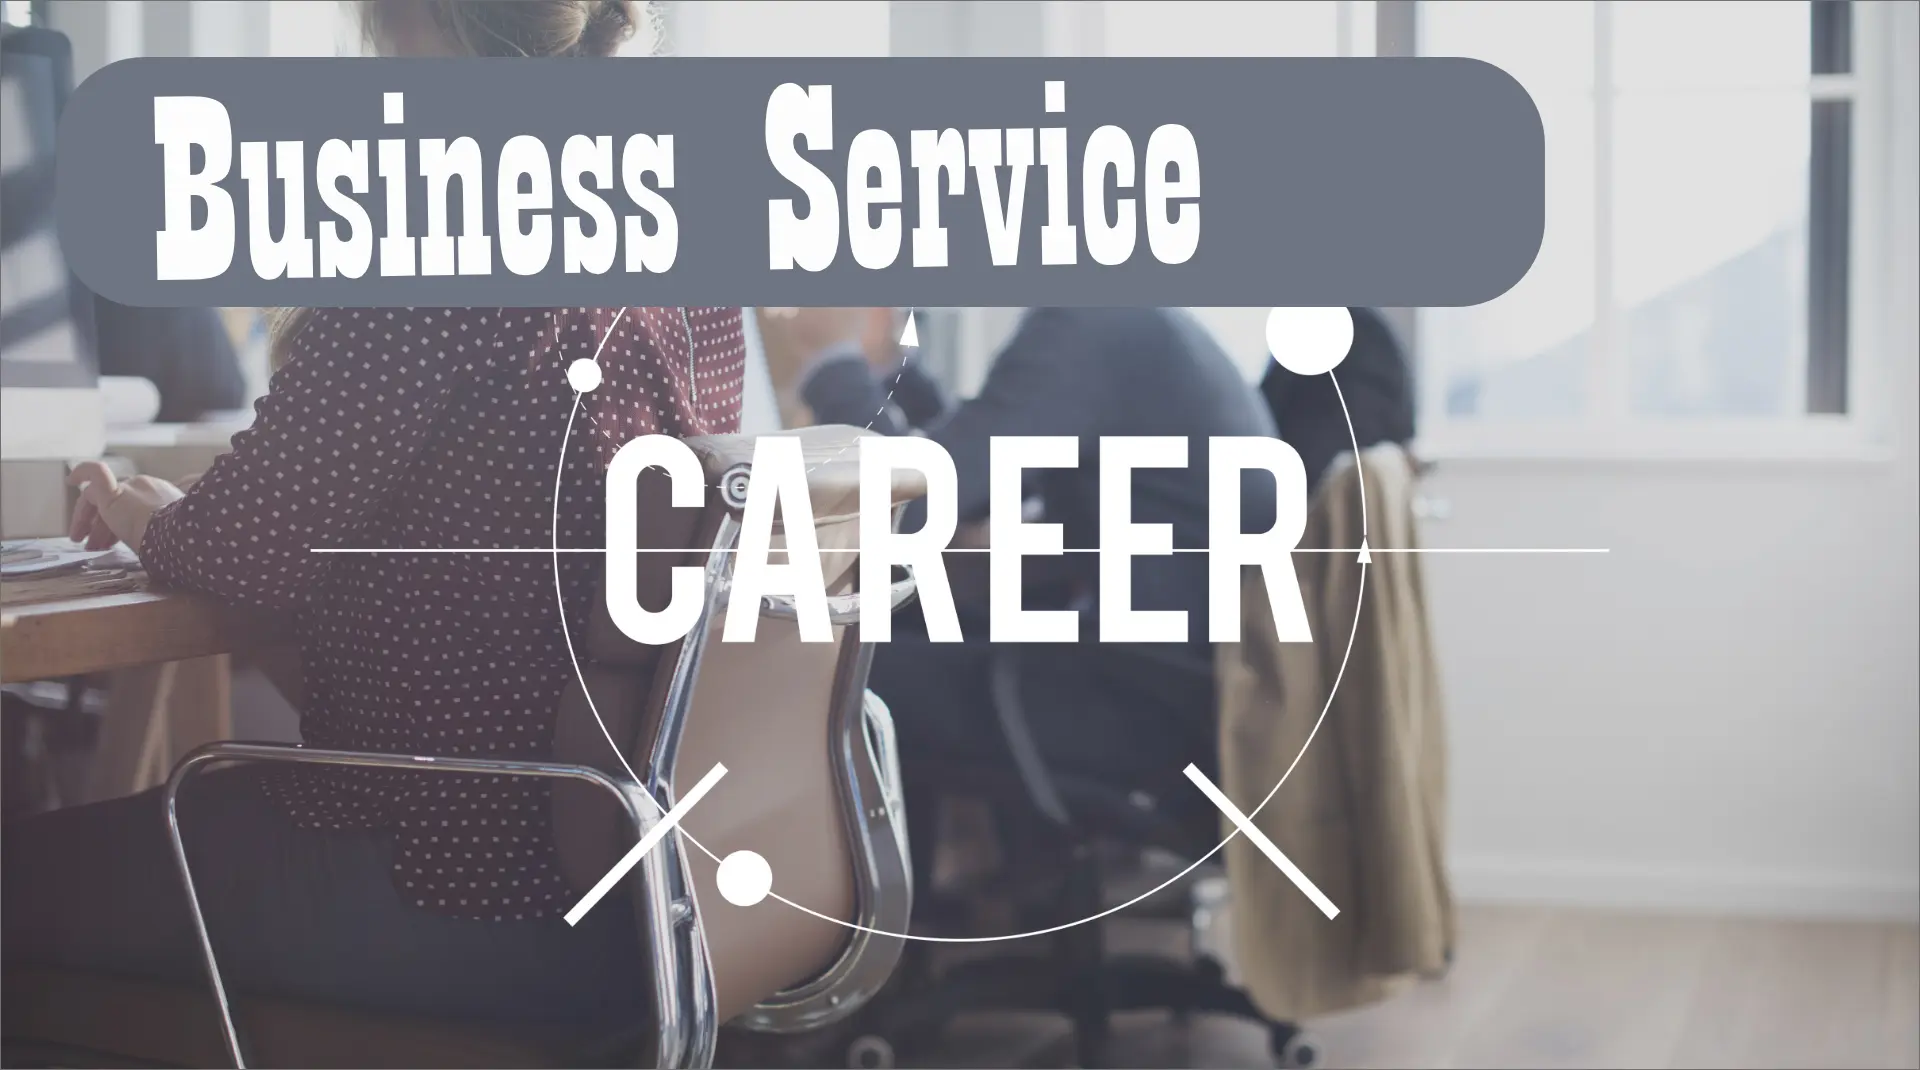 Is a Business Services Career a Good Choice?